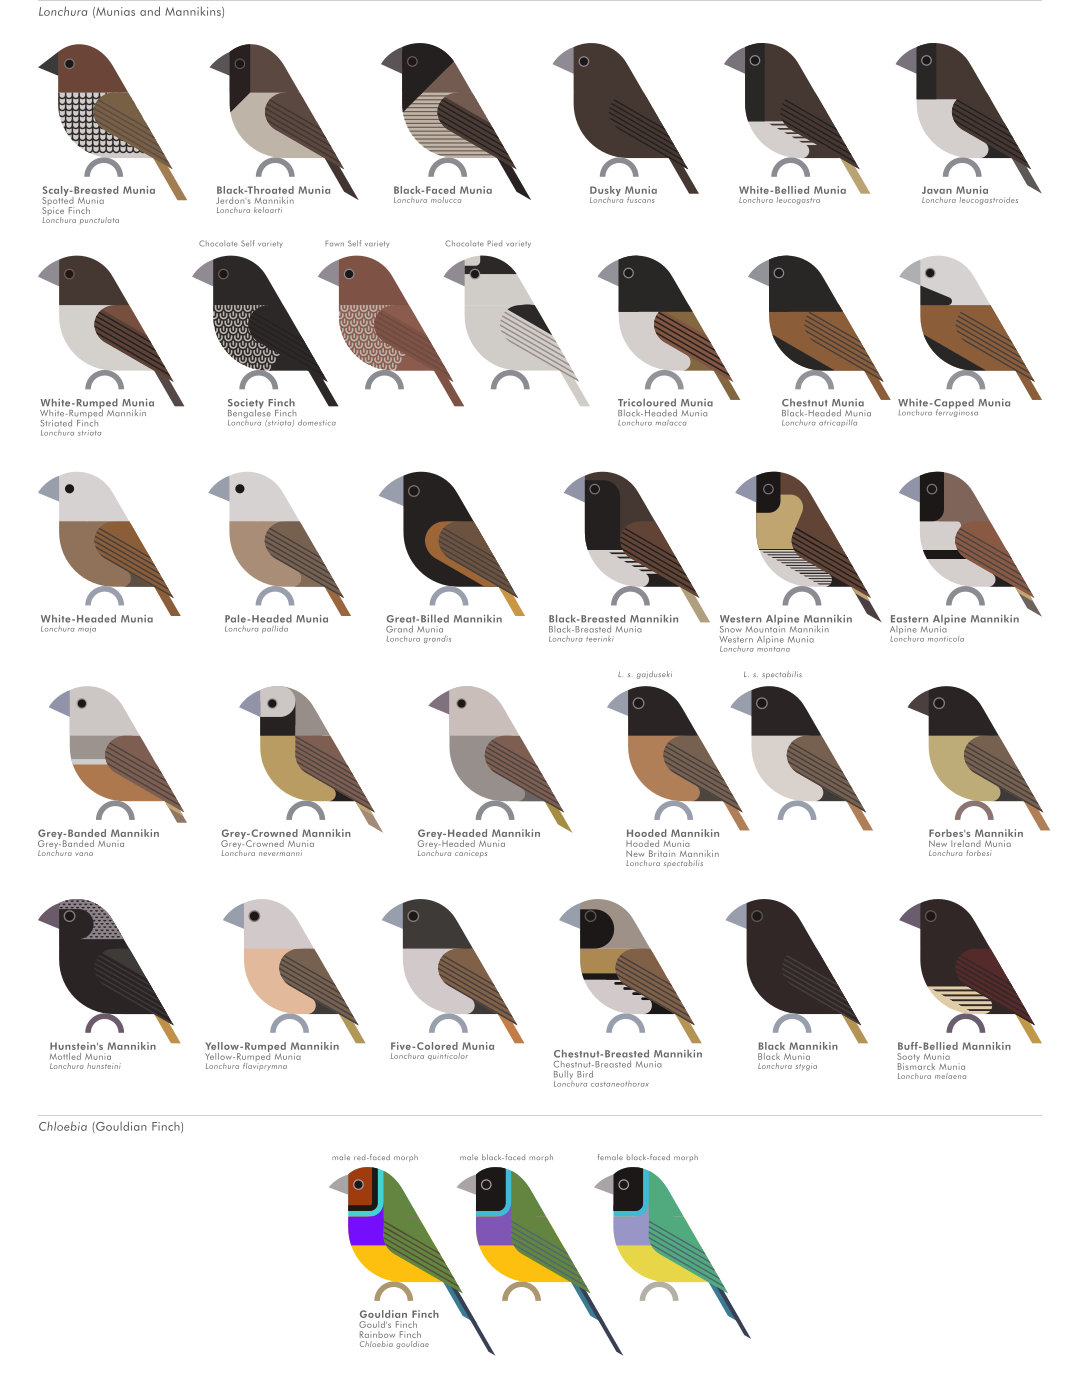 scott partridge - AVE - avian vector encyclopedia - waxbills - bird vector art